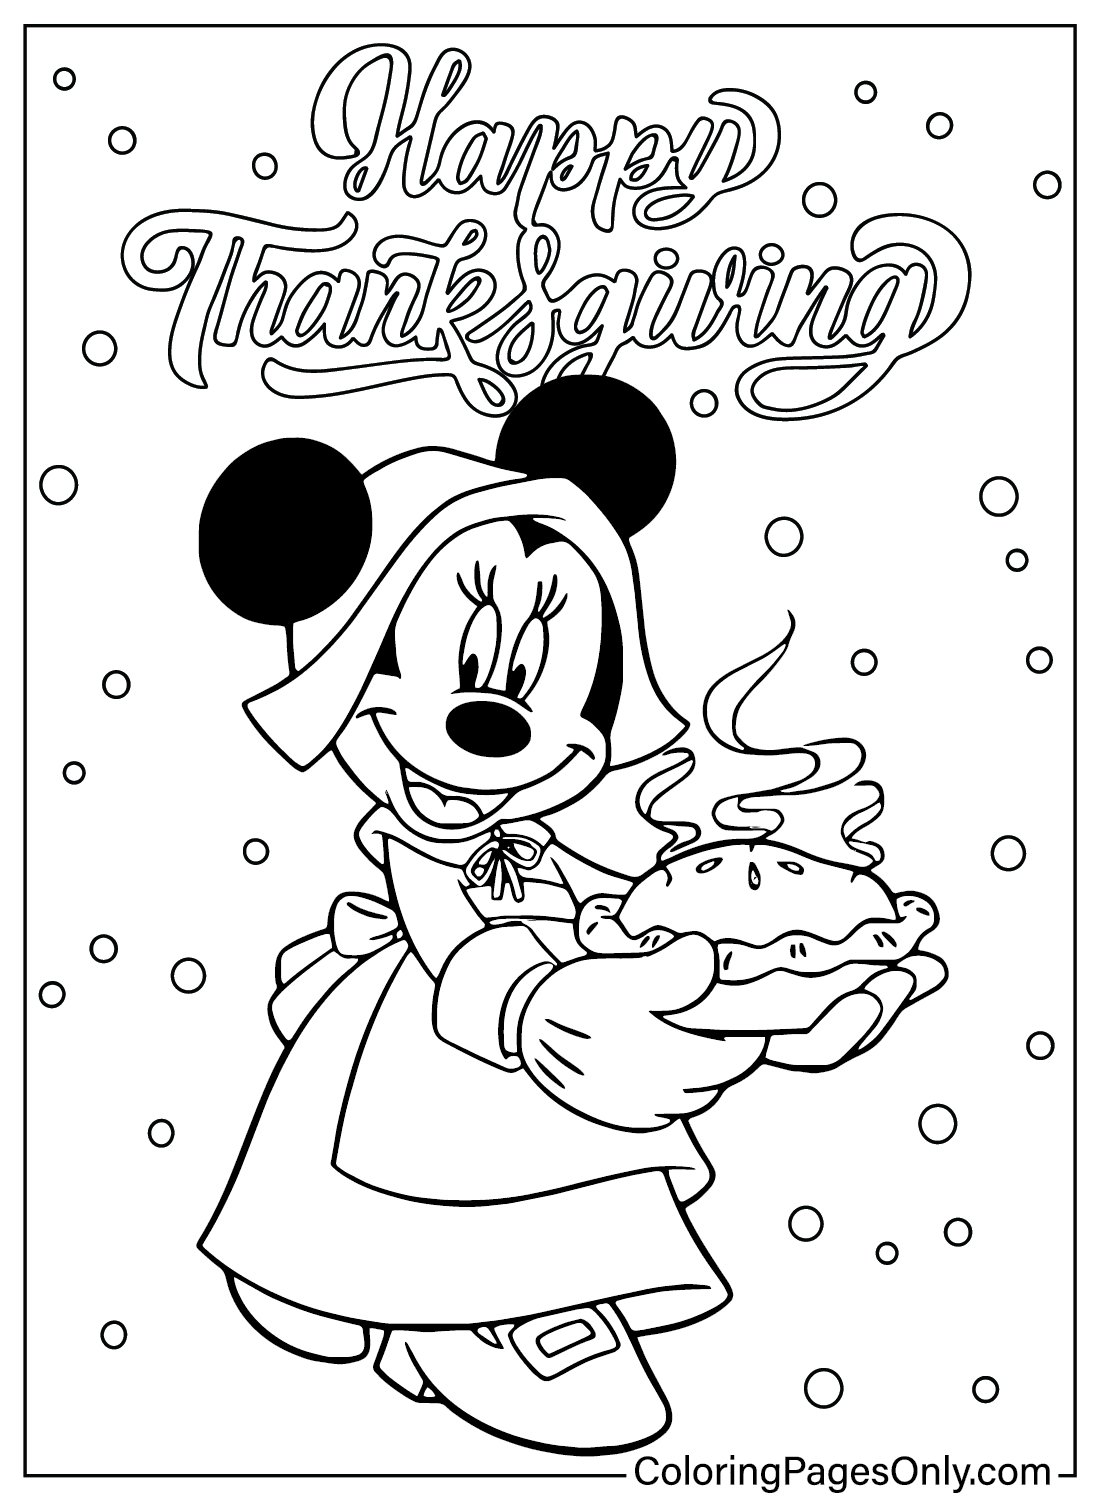 Disney Minnie Thanksgiving kleurplaat van Disney Thanksgiving